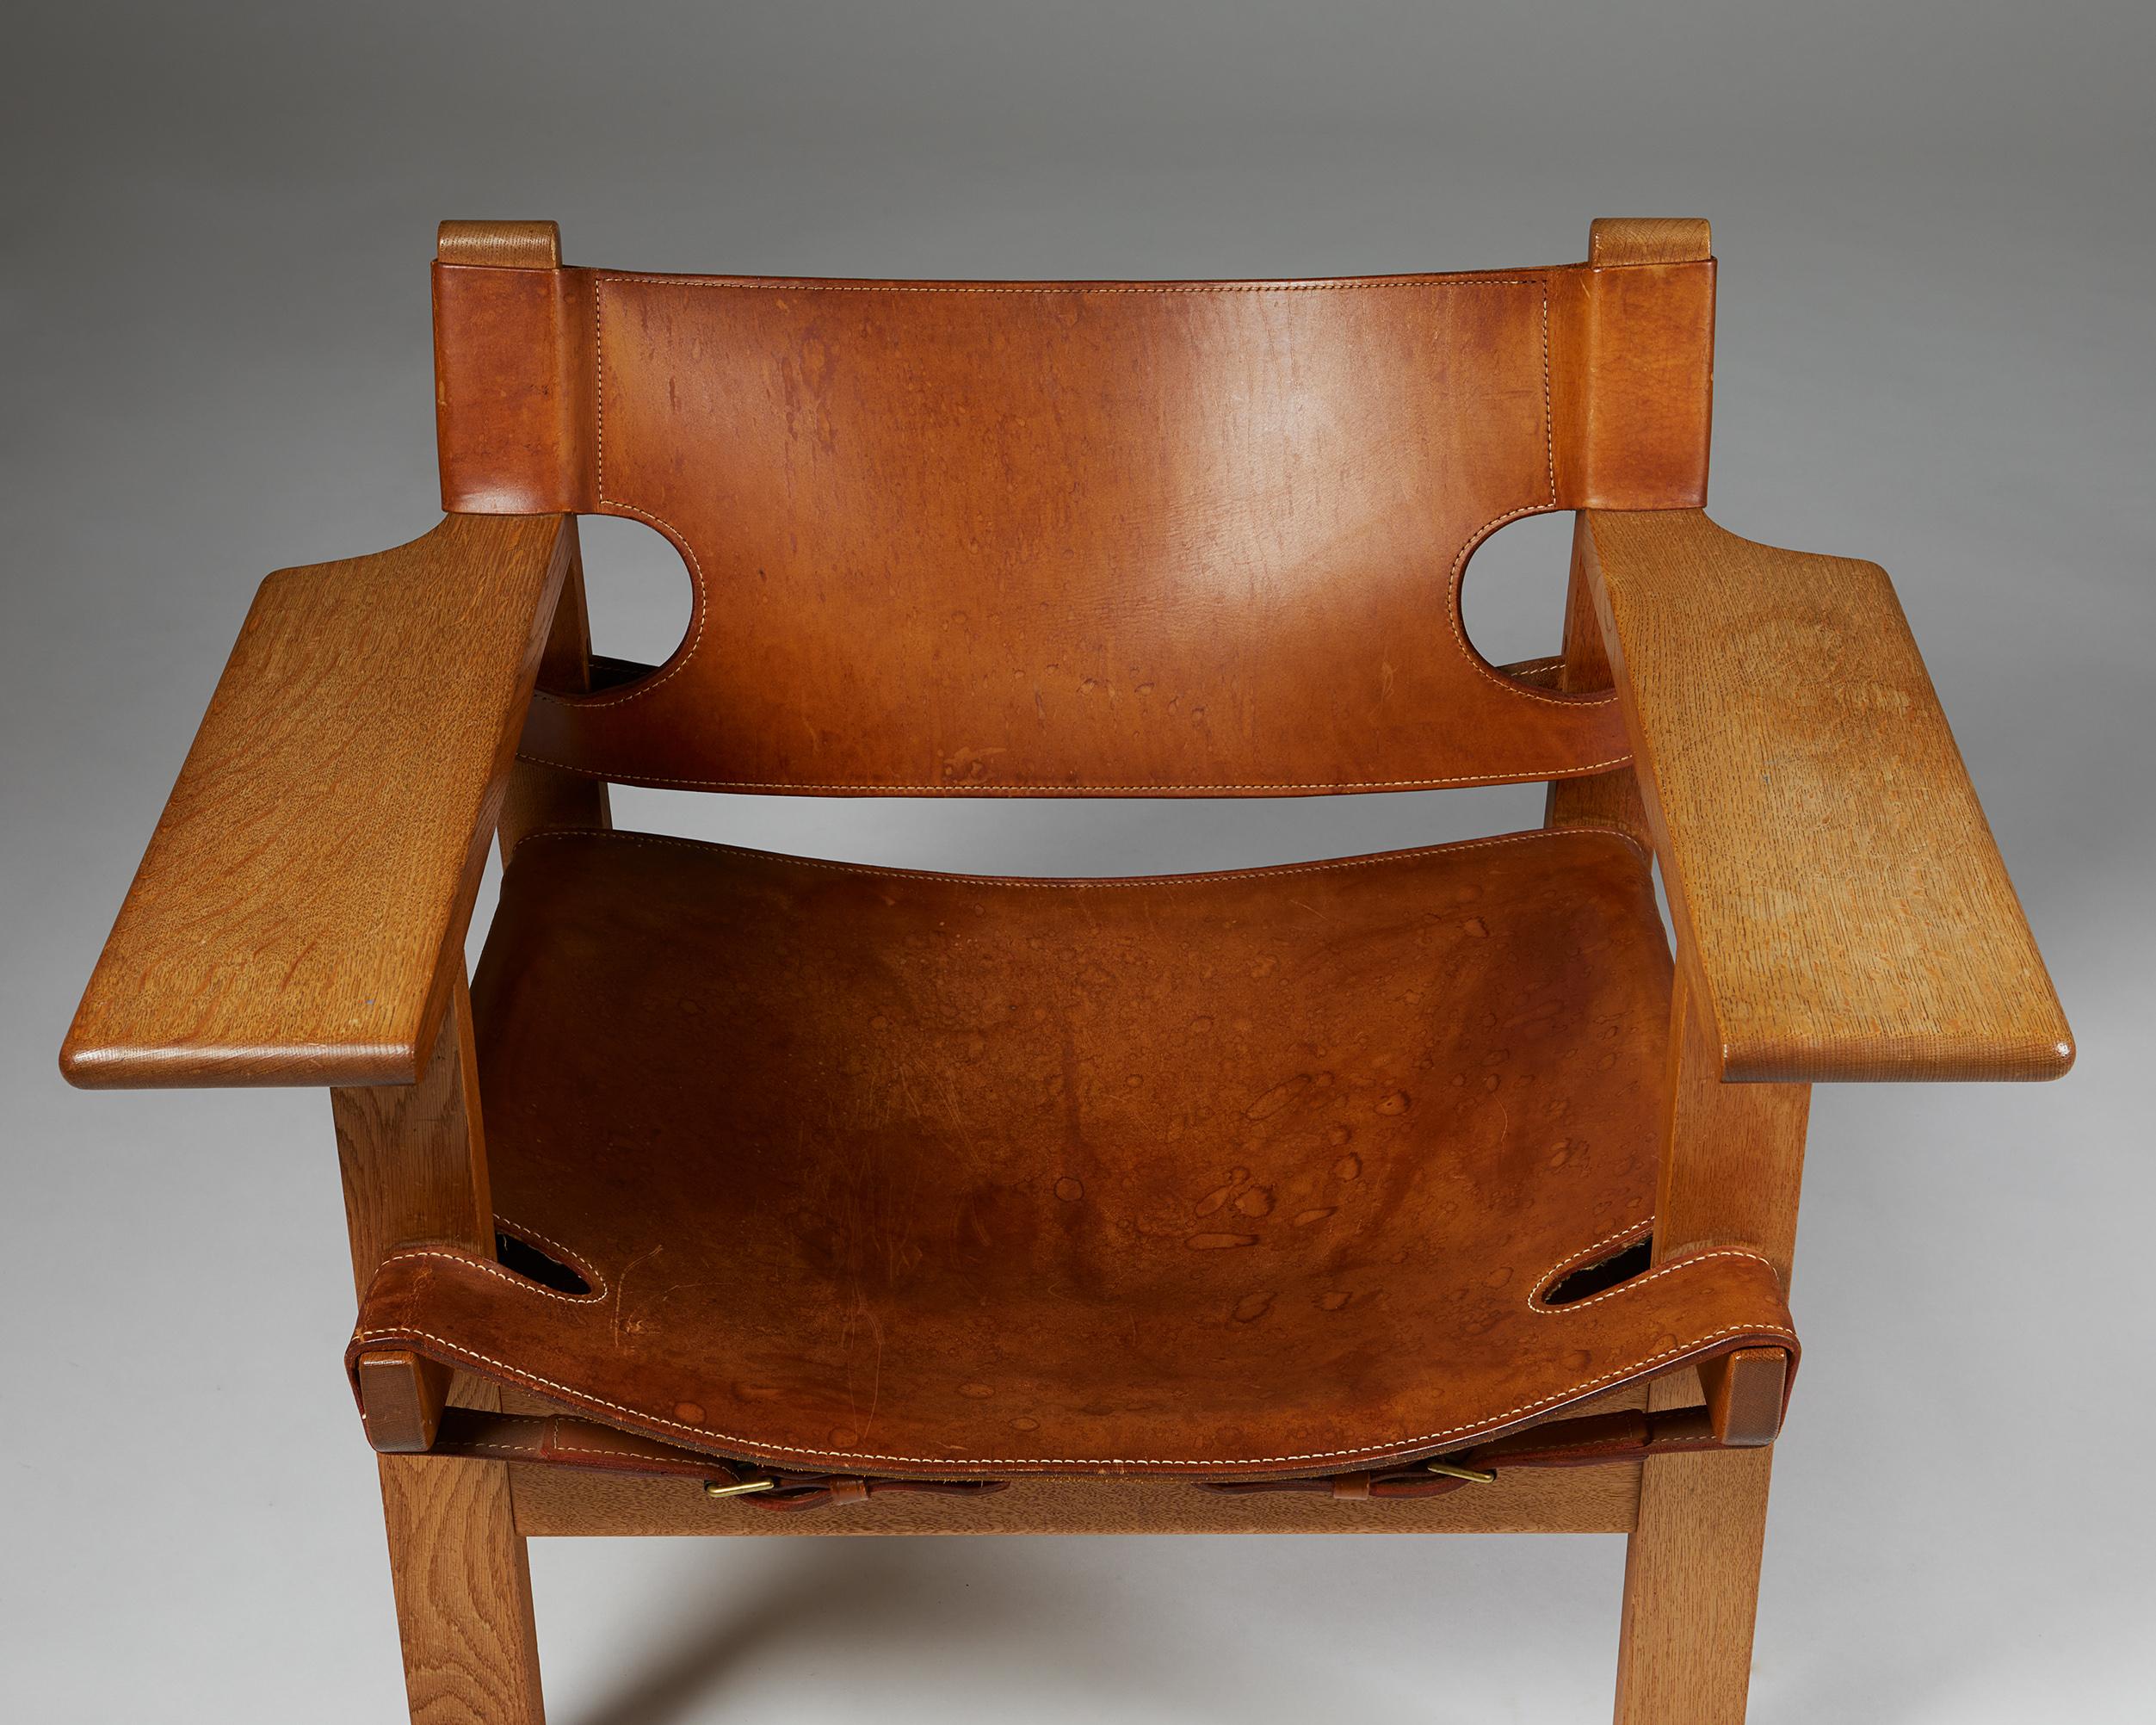 Leather Armchair “Spanish” Designed by Börge Mogensen for Fredericia Stolefabrik